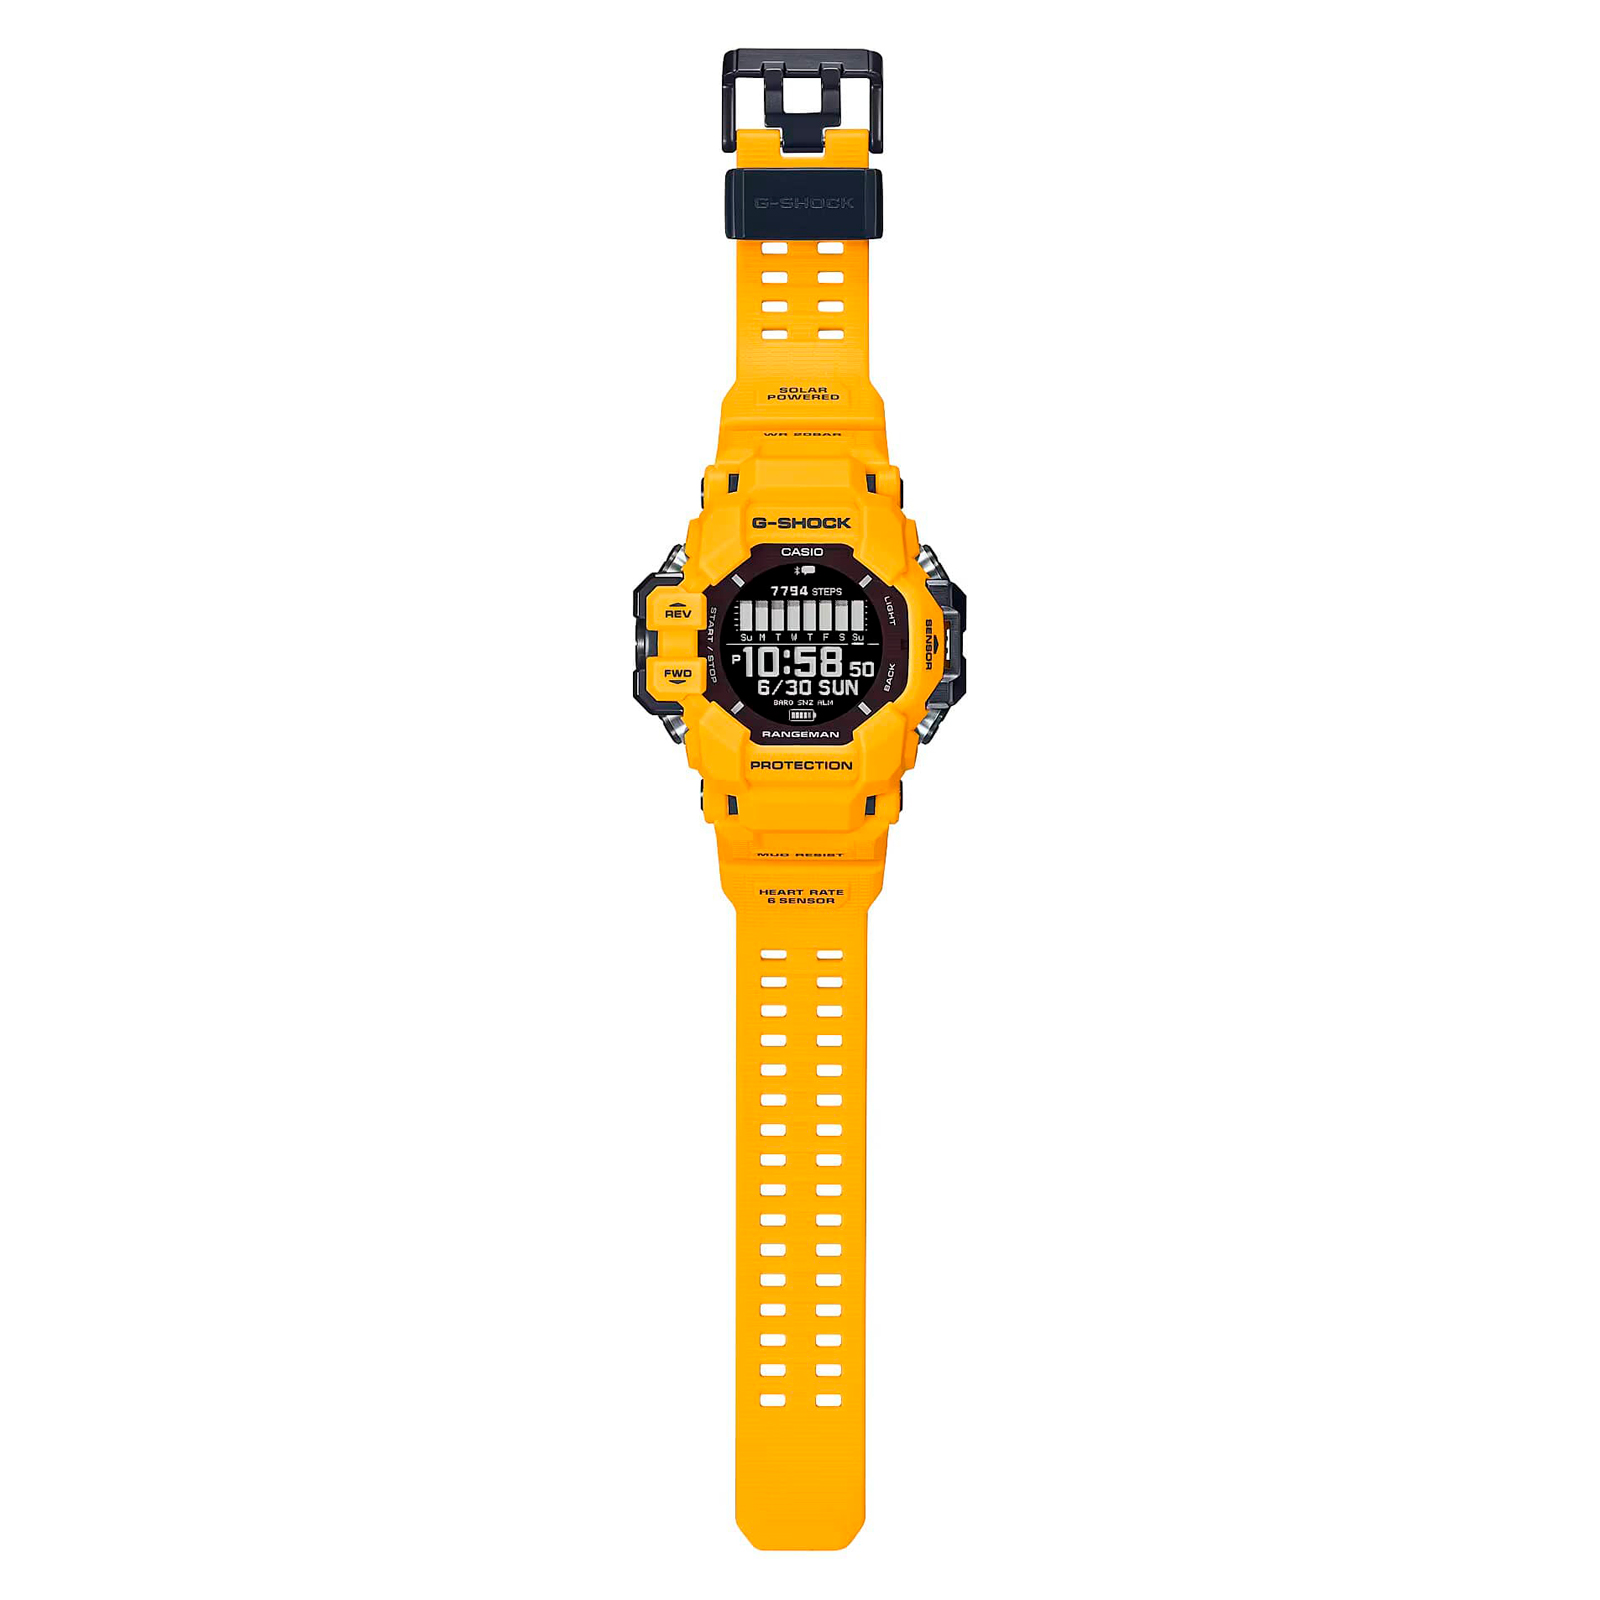 Reloj G-SHOCK GPR-H1000-9D Resina Hombre Amarillo